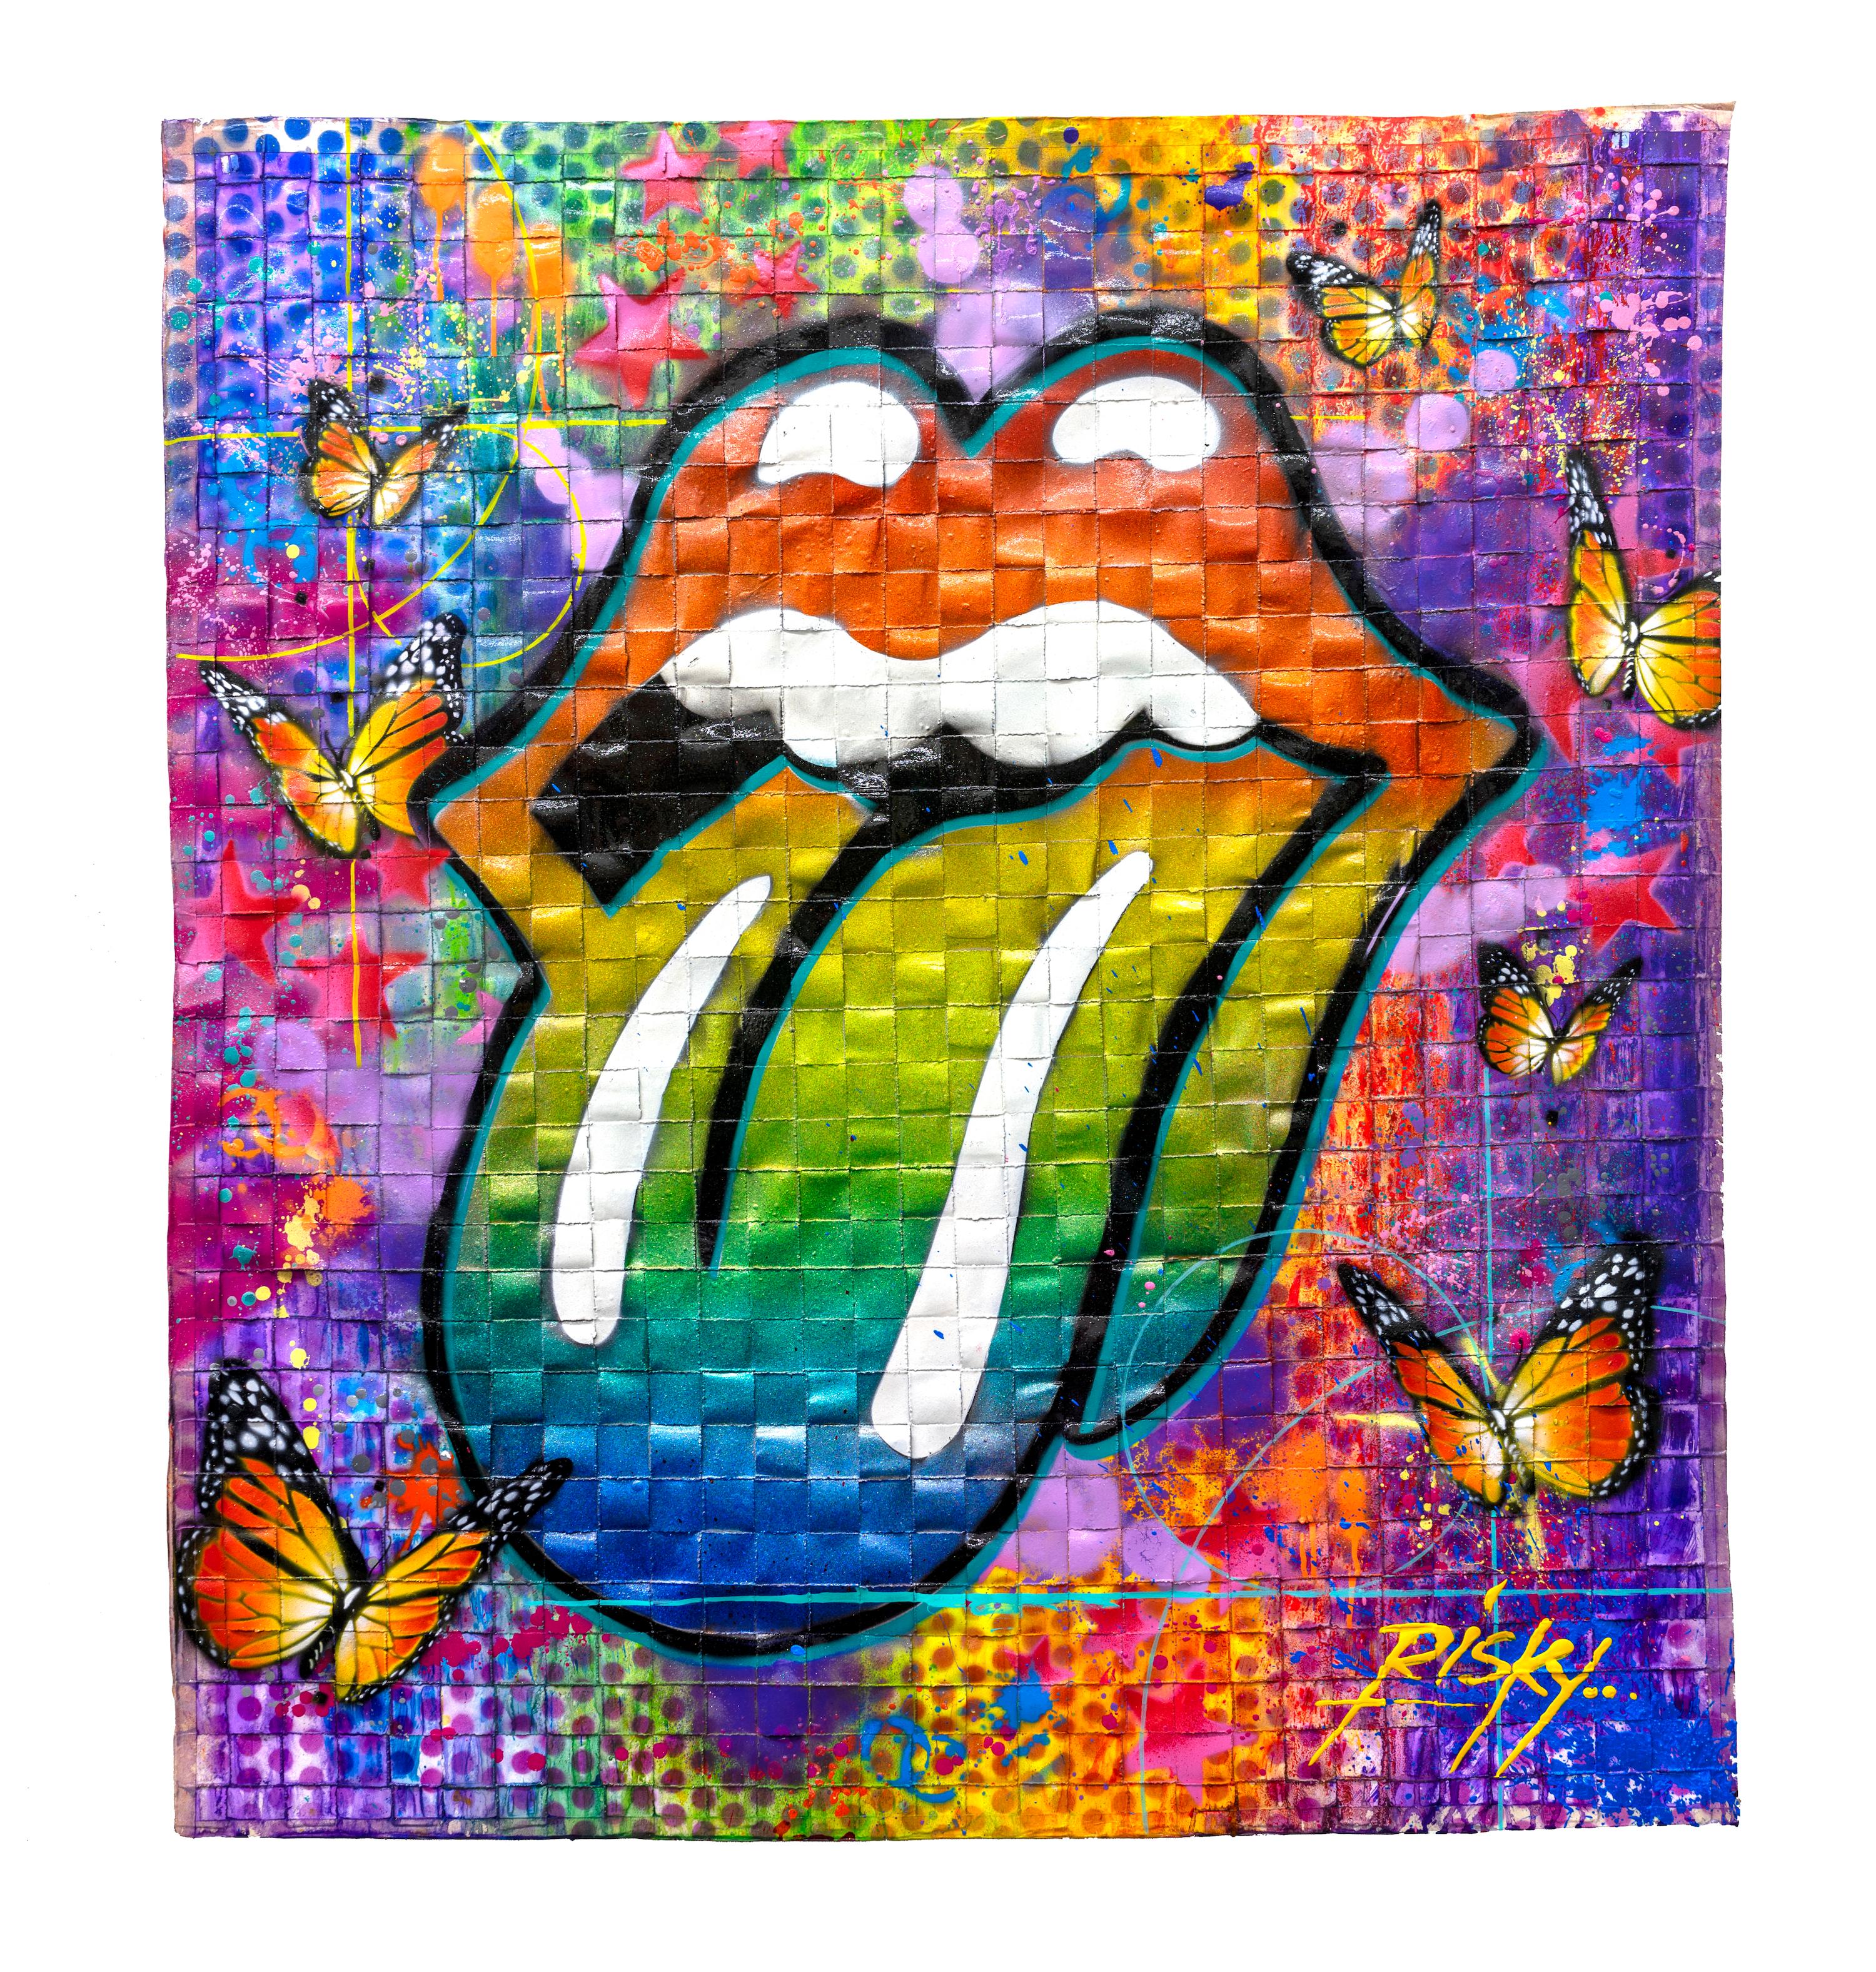 Gerahmte, farbenfrohe Mixed Media-Rolling Risky-Street-Kunstwerke der Rolling Stones – Art von RISK